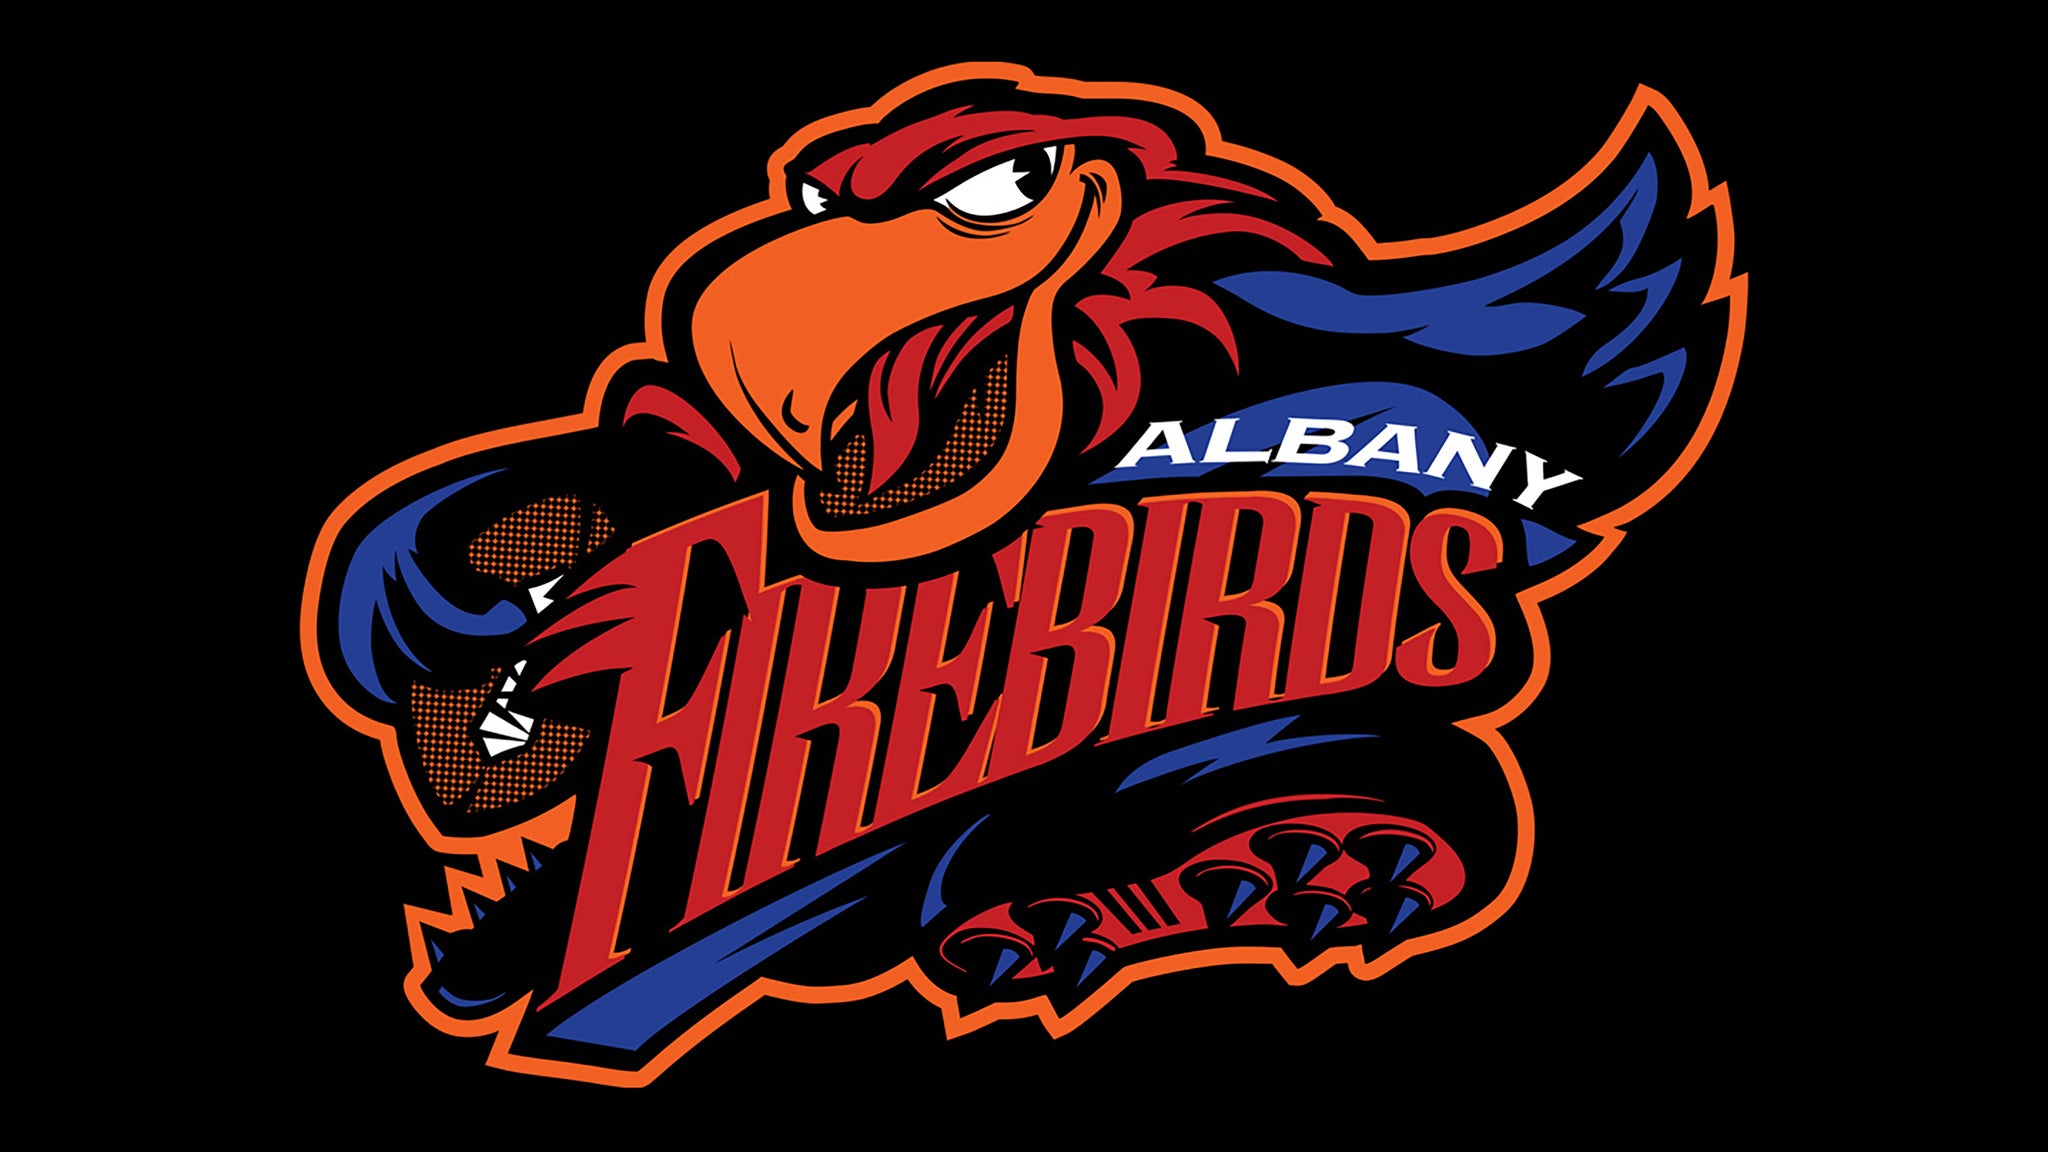 Albany Firebirds vs. Southwest Kansas Storm